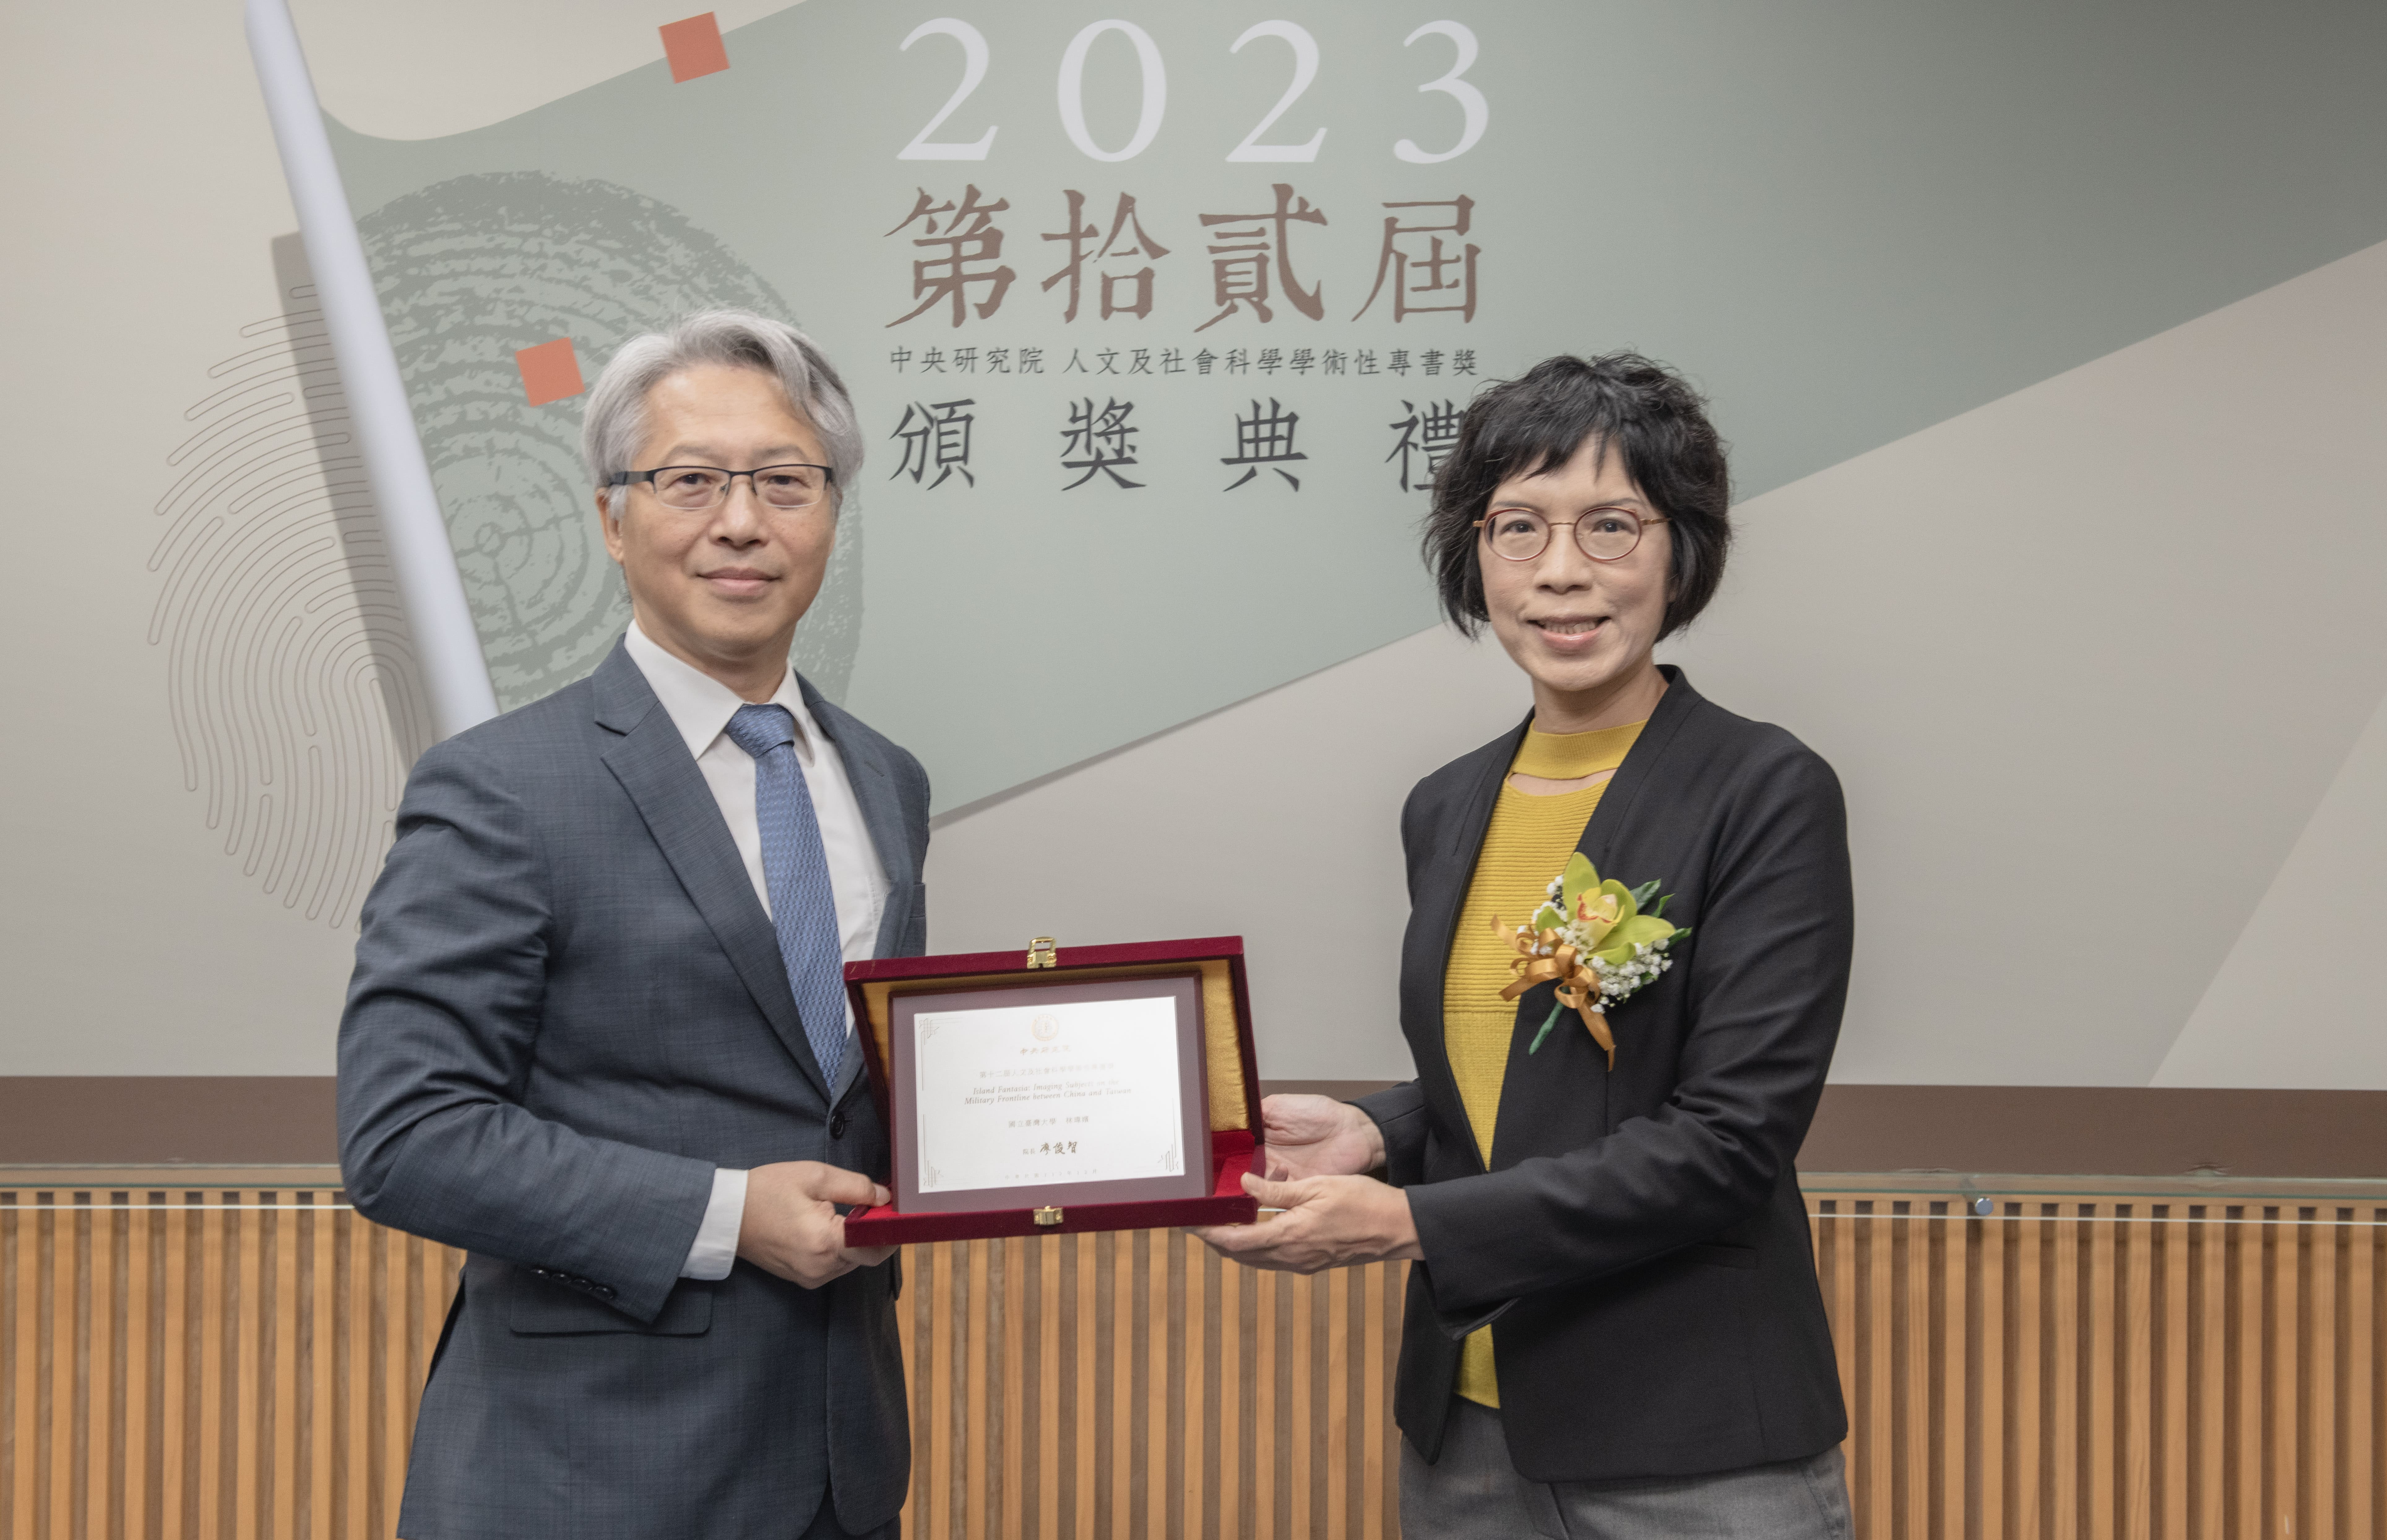 Lin, Wei-Ping, Professor, Department of Anthropology, National Taiwan University